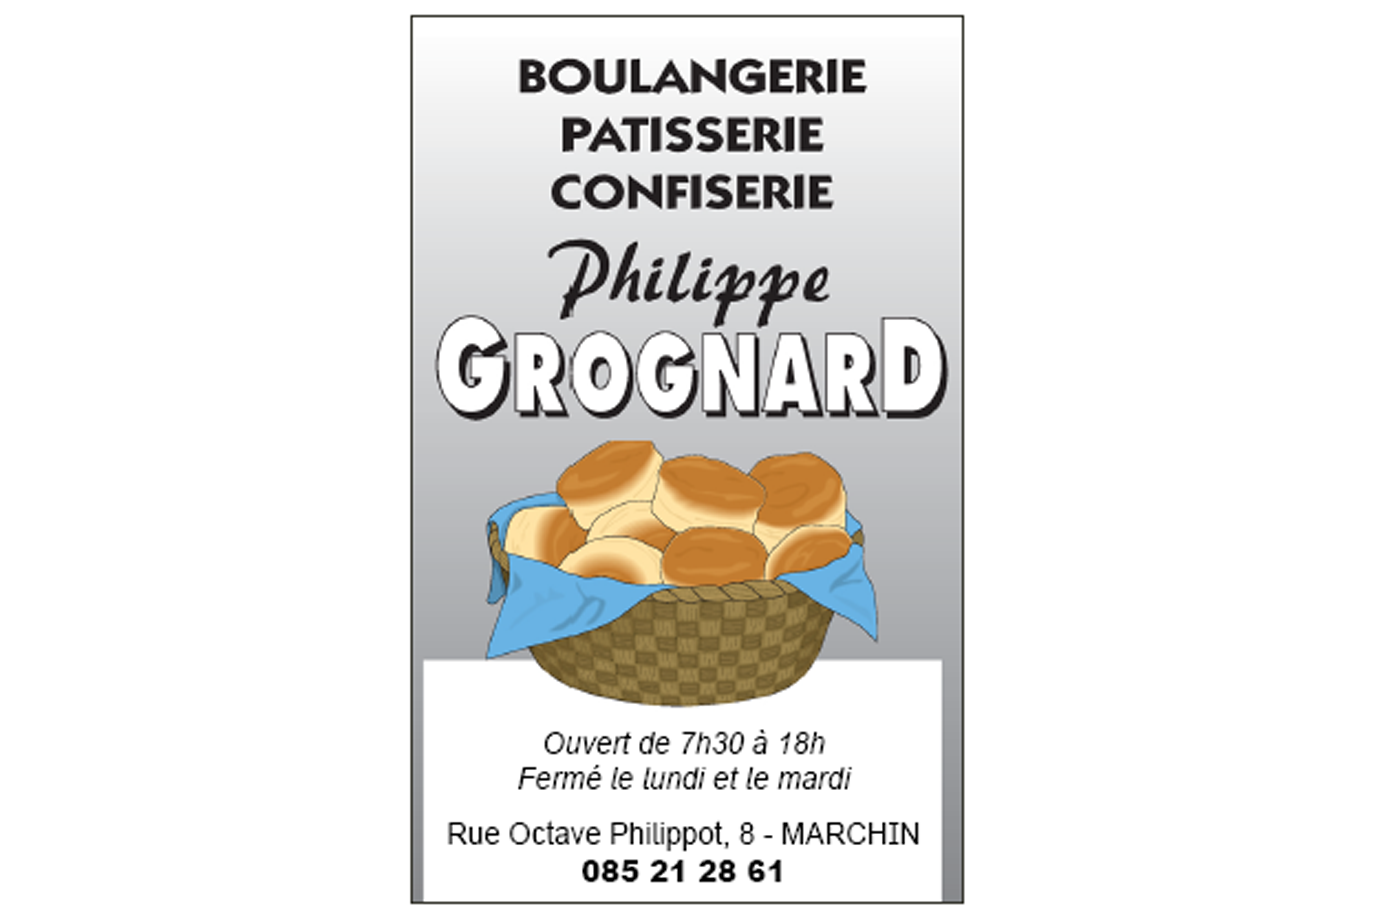 Boulangerie Grognard